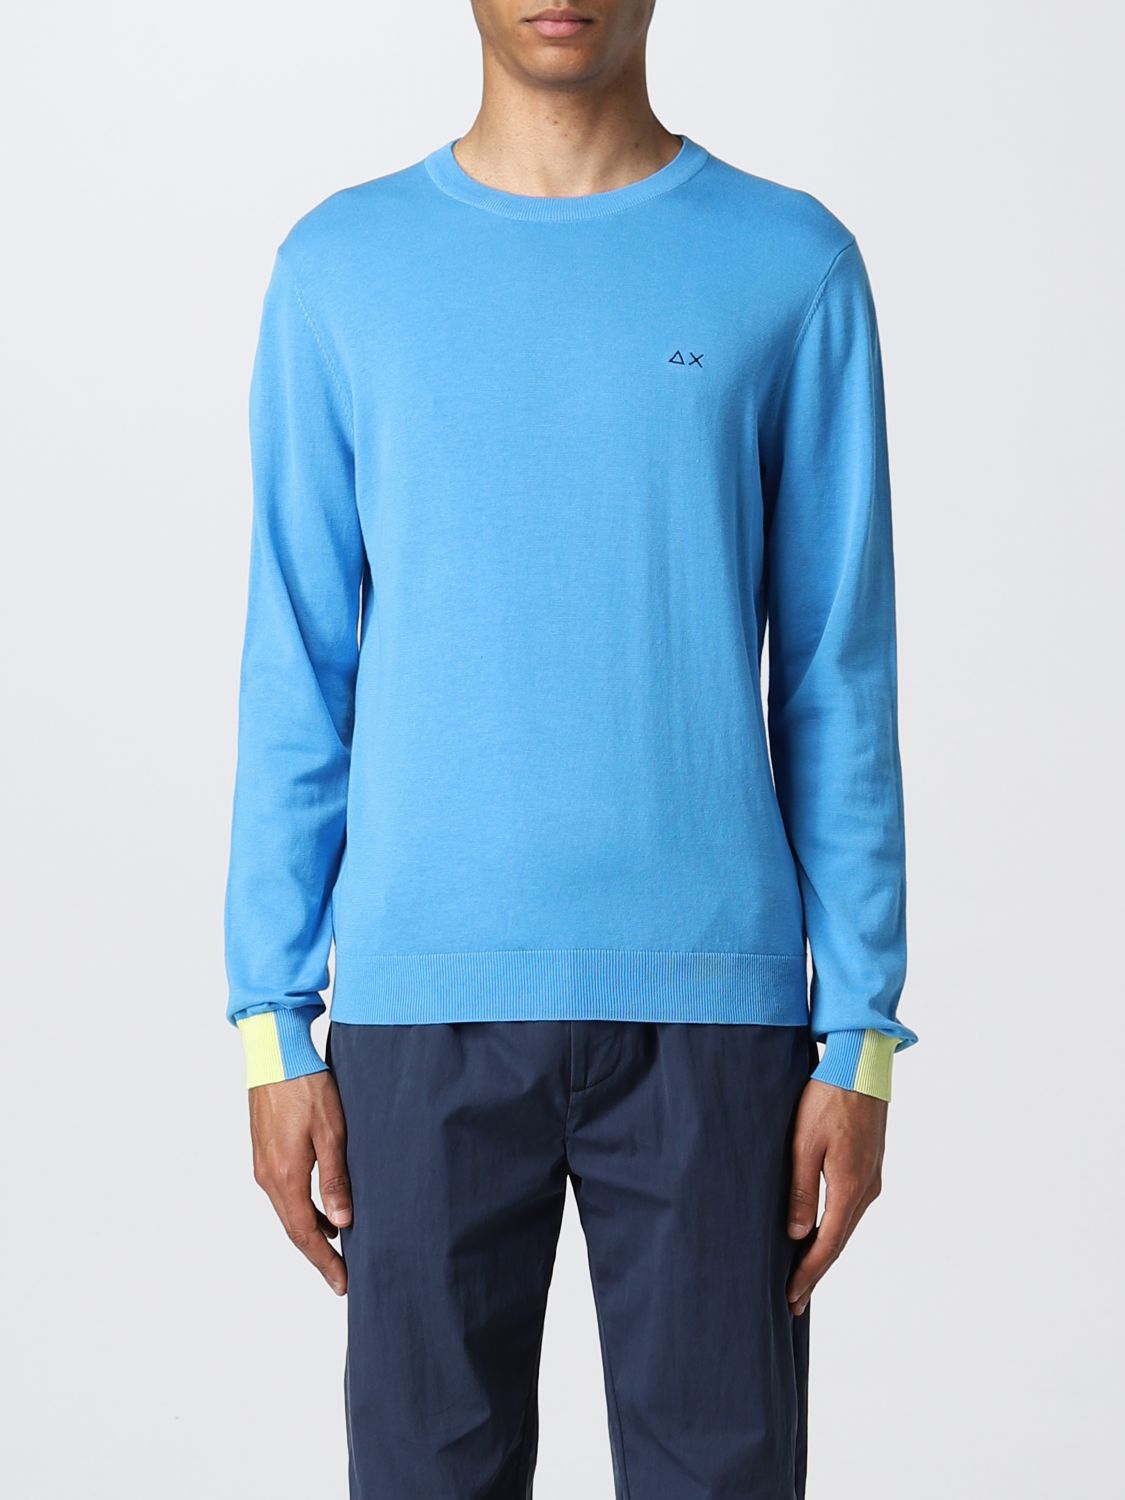 SUN 68: sweater for man - Turquoise | Sun 68 sweater K32106 online on ...